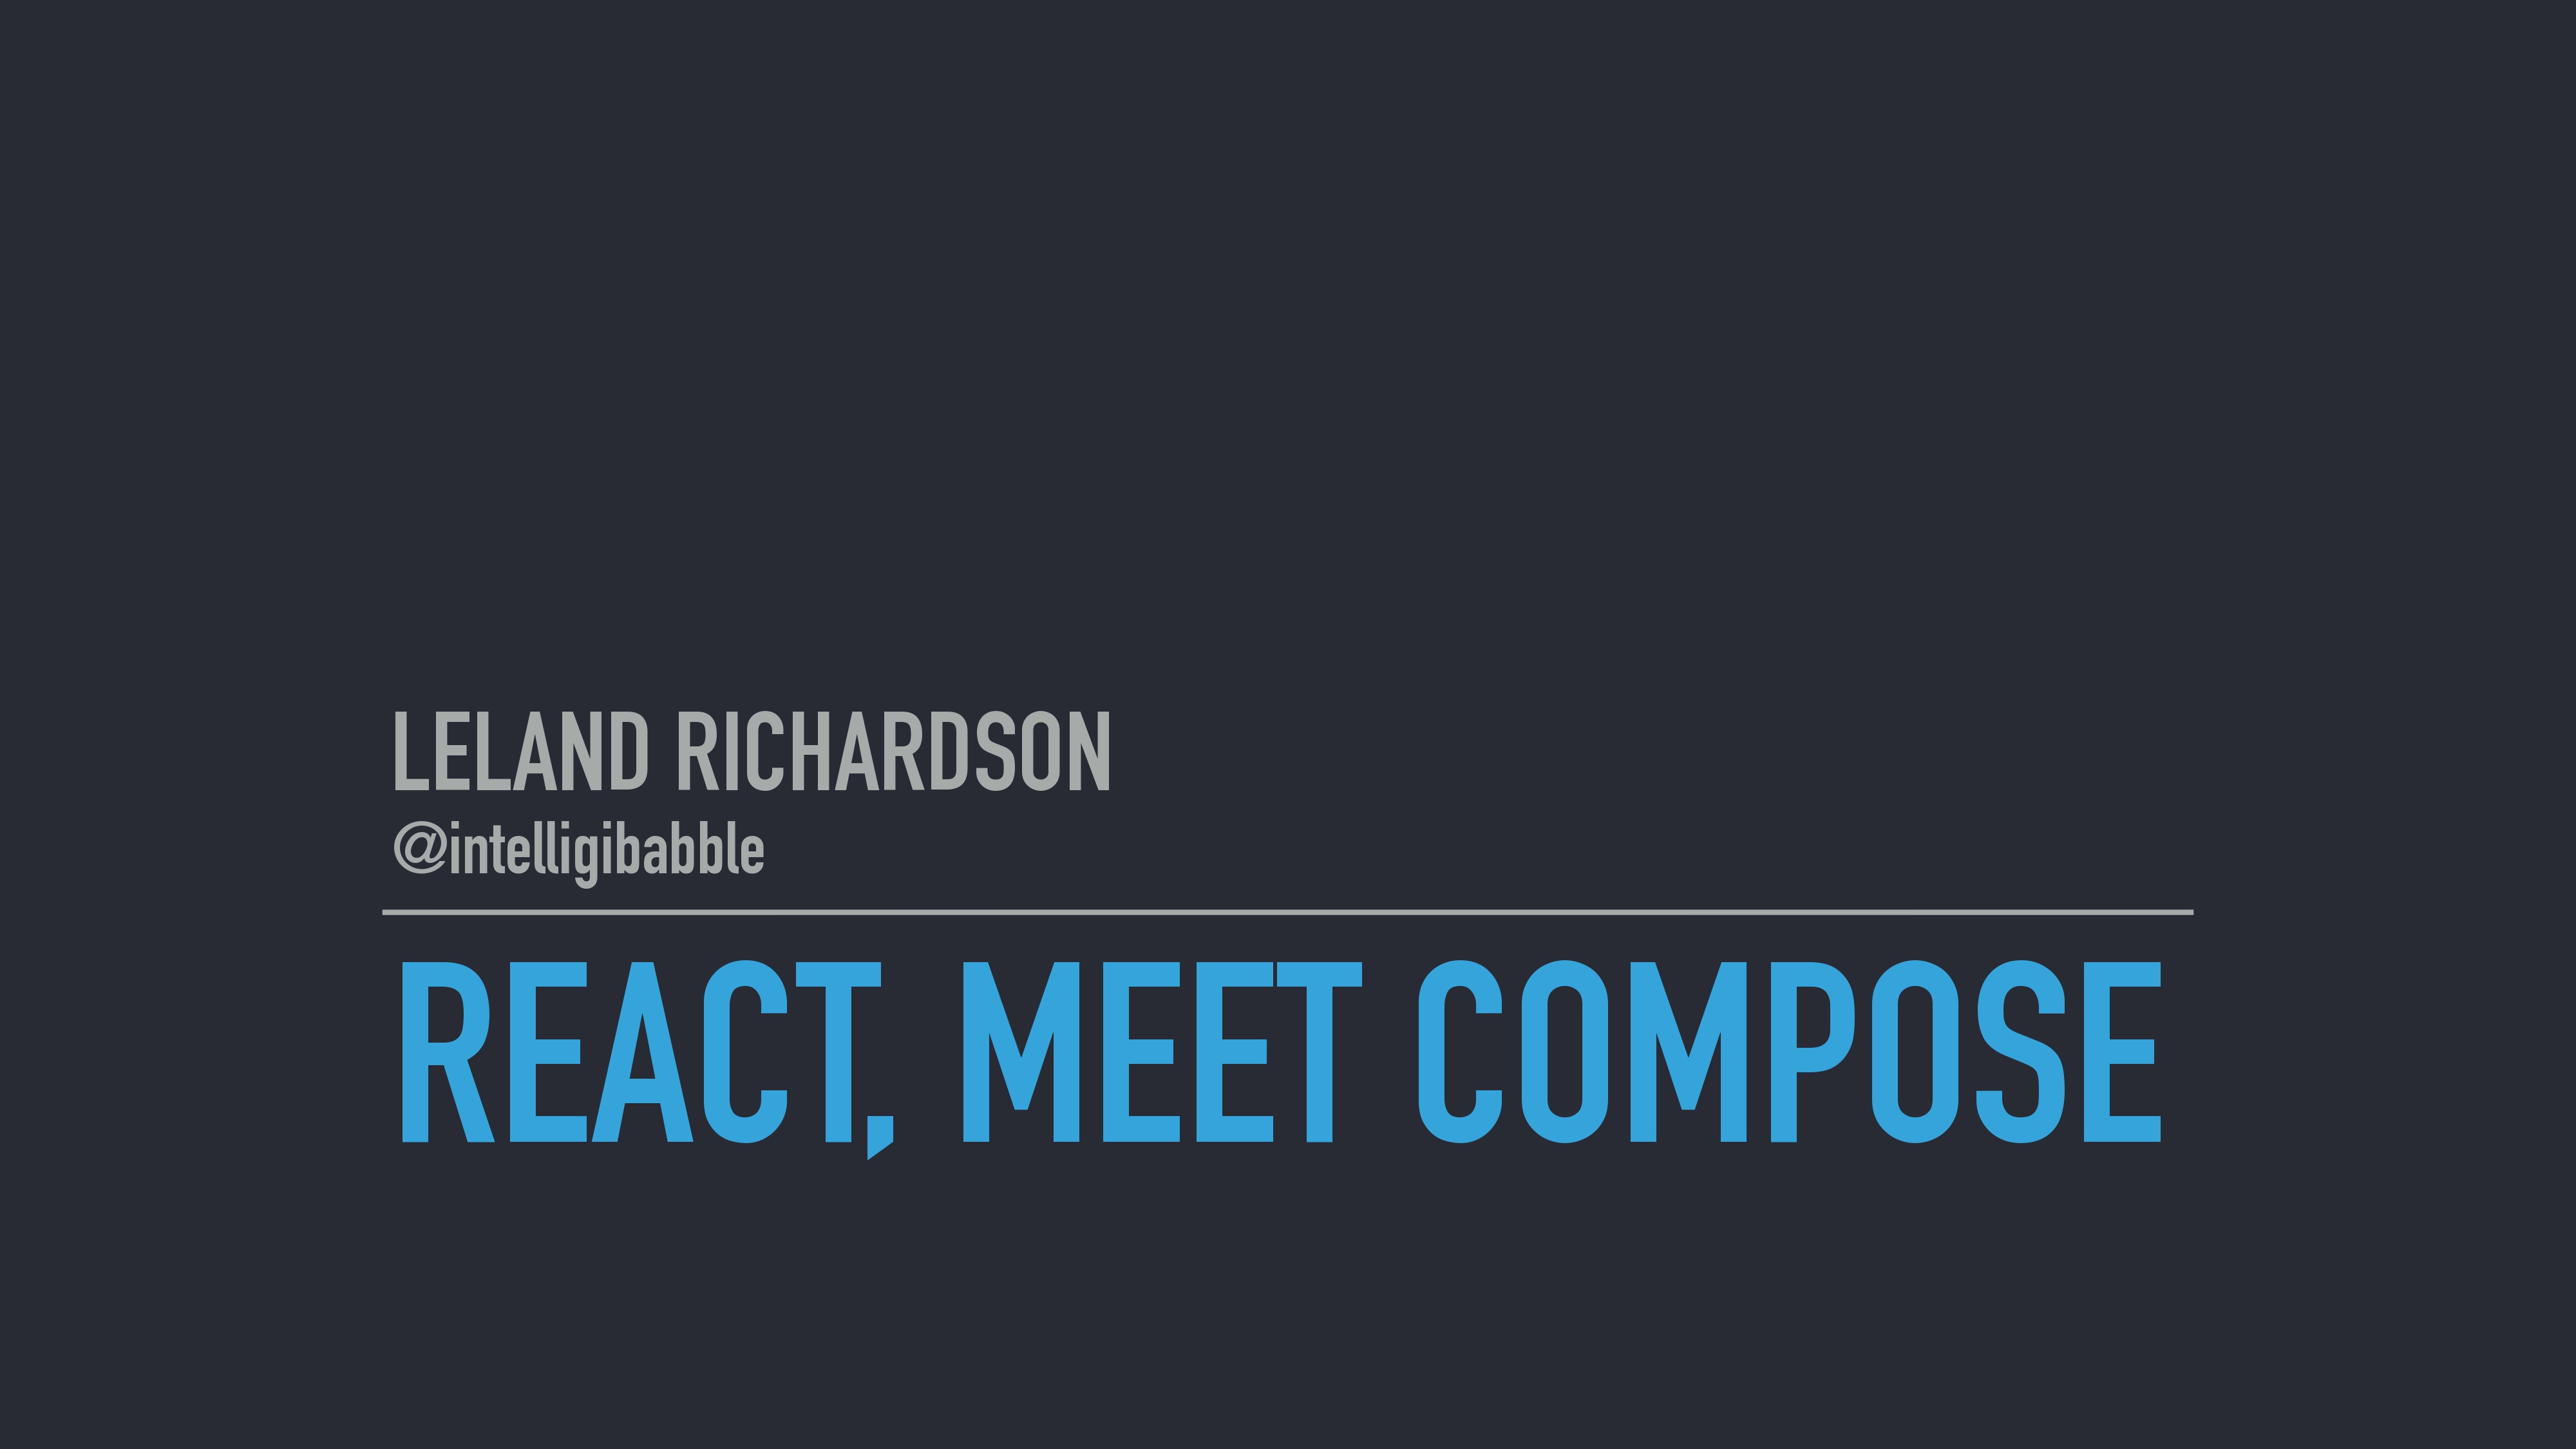 React, Meet Compose by Leland Richardson